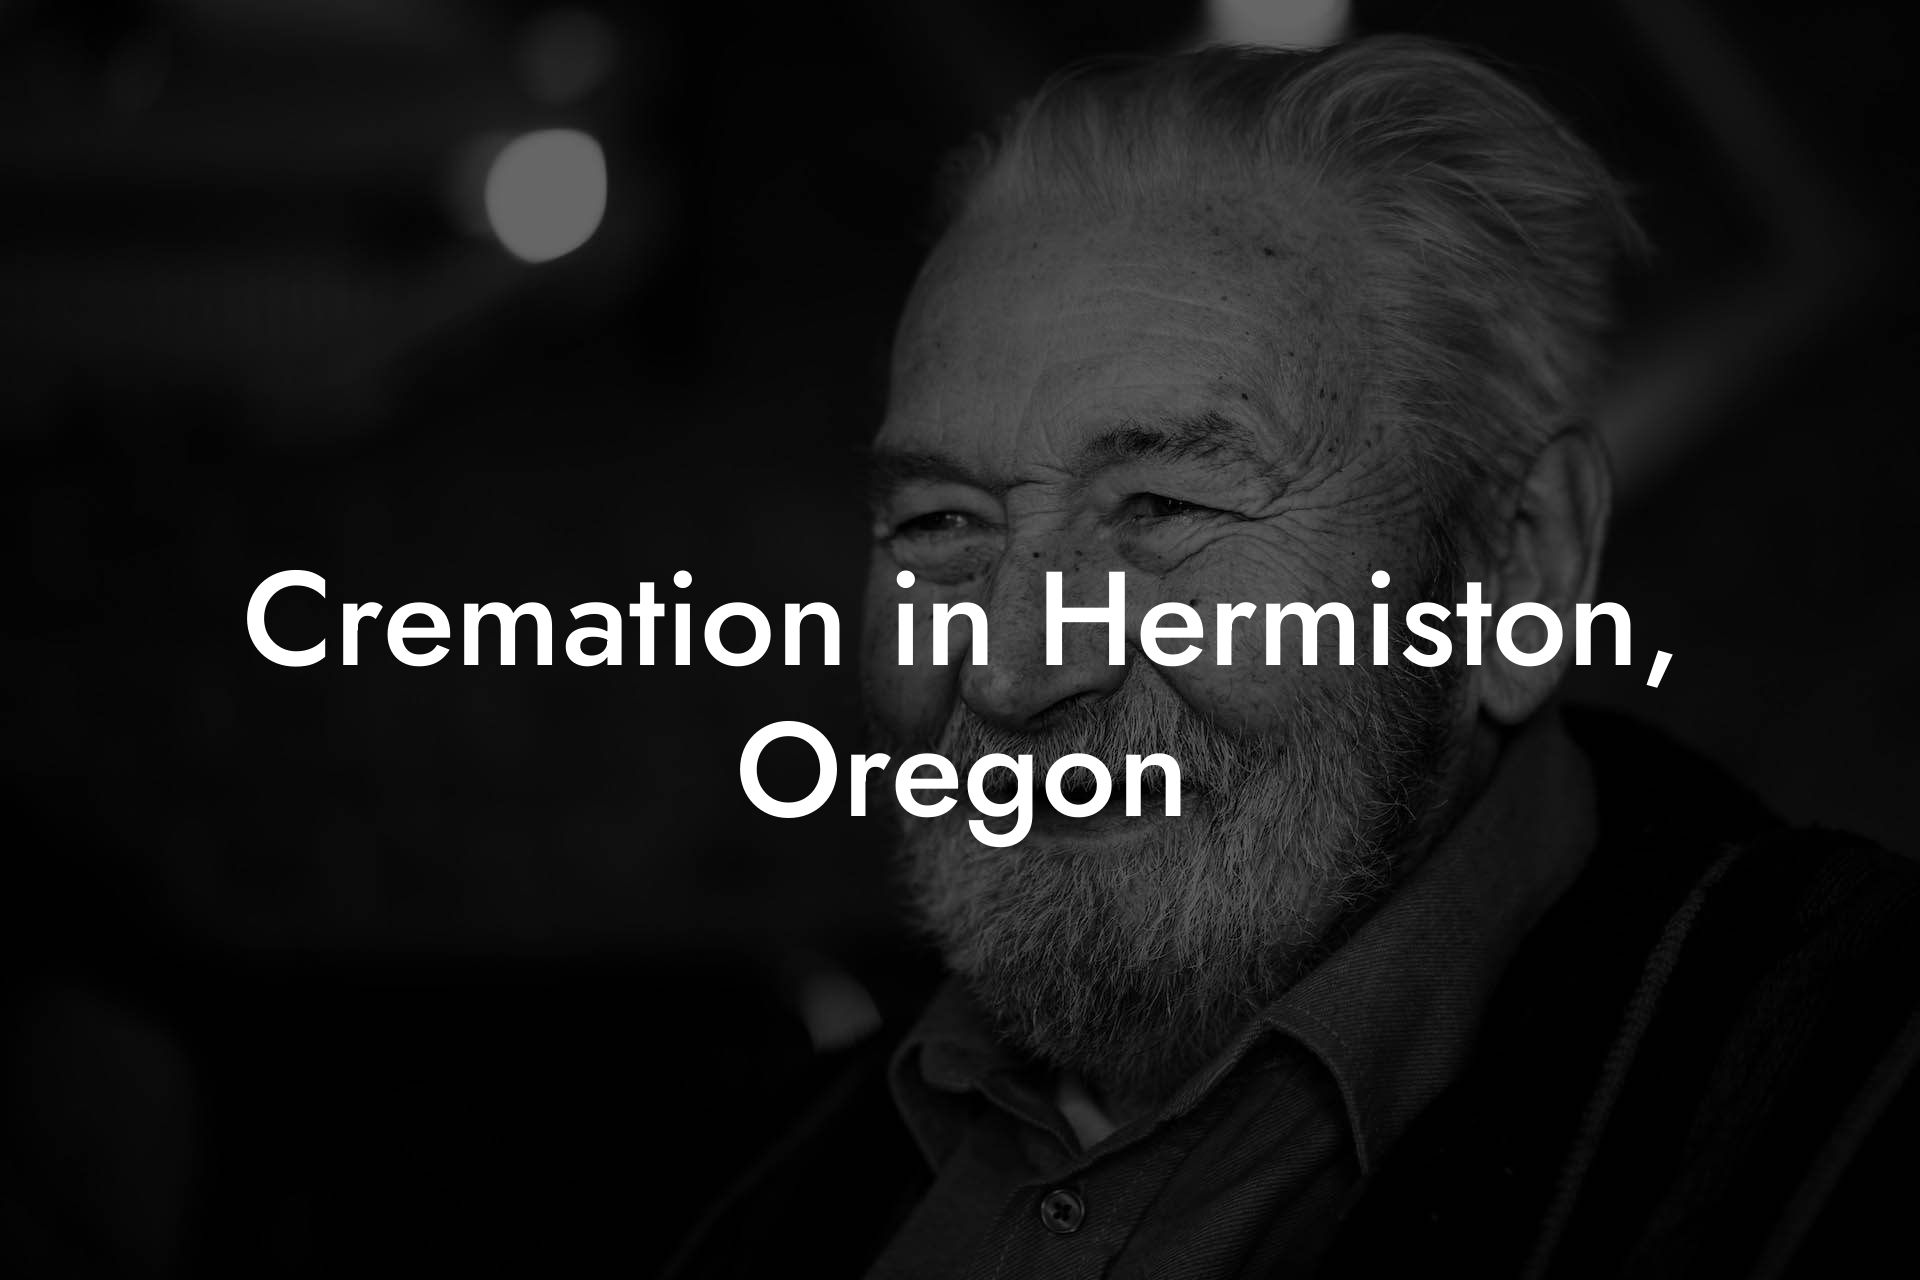 Cremation in Hermiston, Oregon